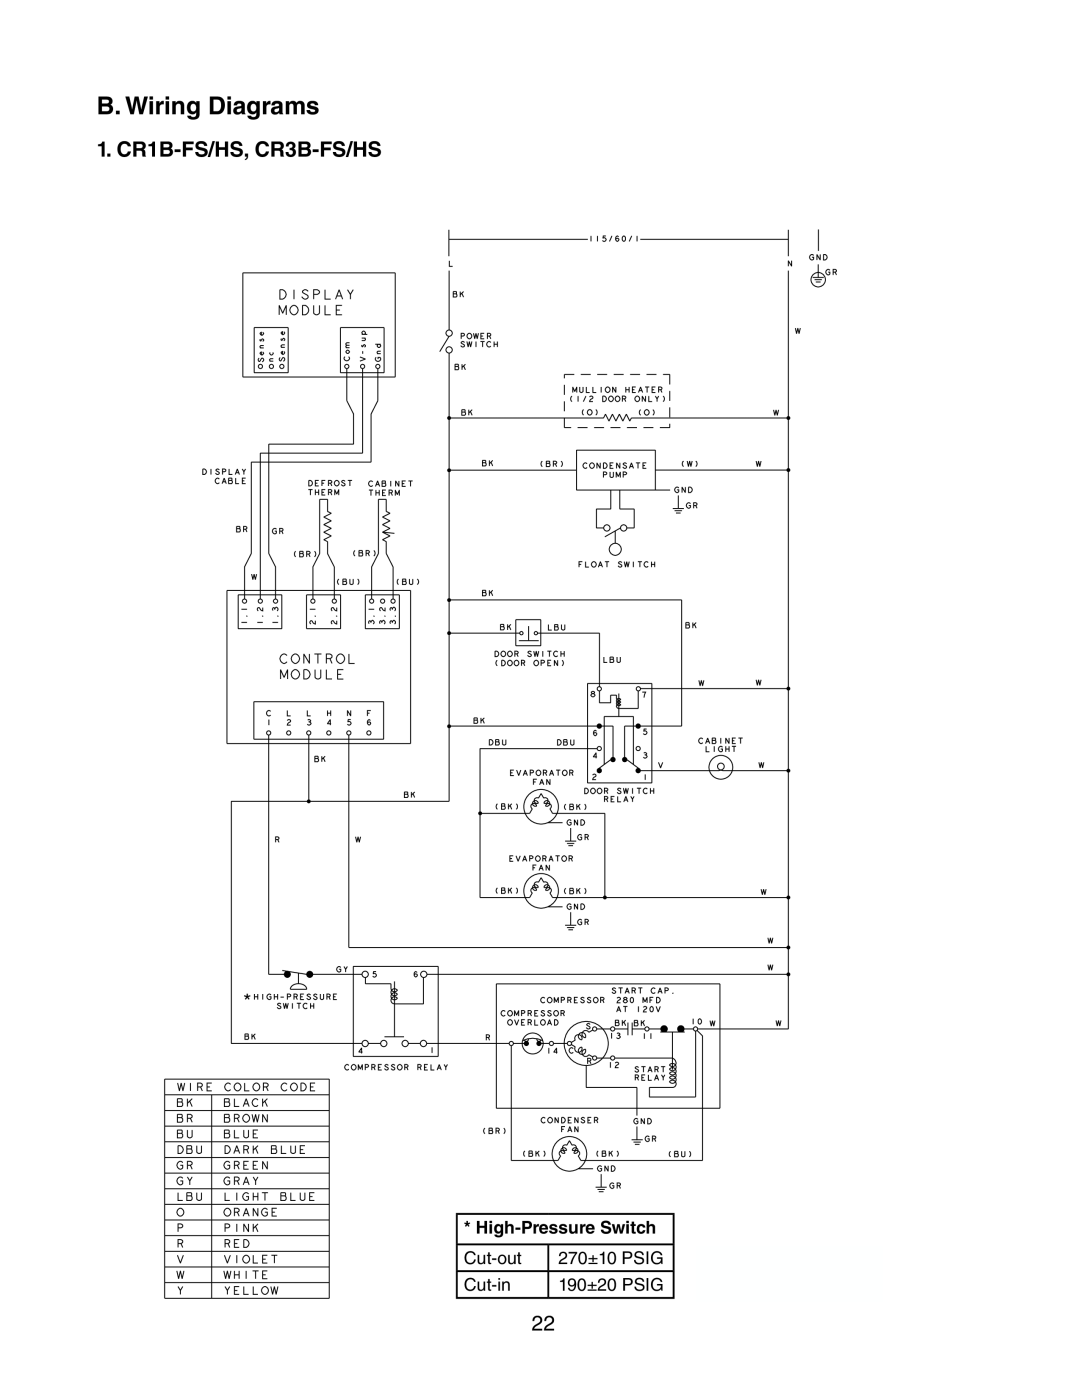 Hoshizaki 73183 service manual B. Wiring Diagrams, 1. CR1B-FS/HS, CR3B-FS/HS, High-Pressure Switch 